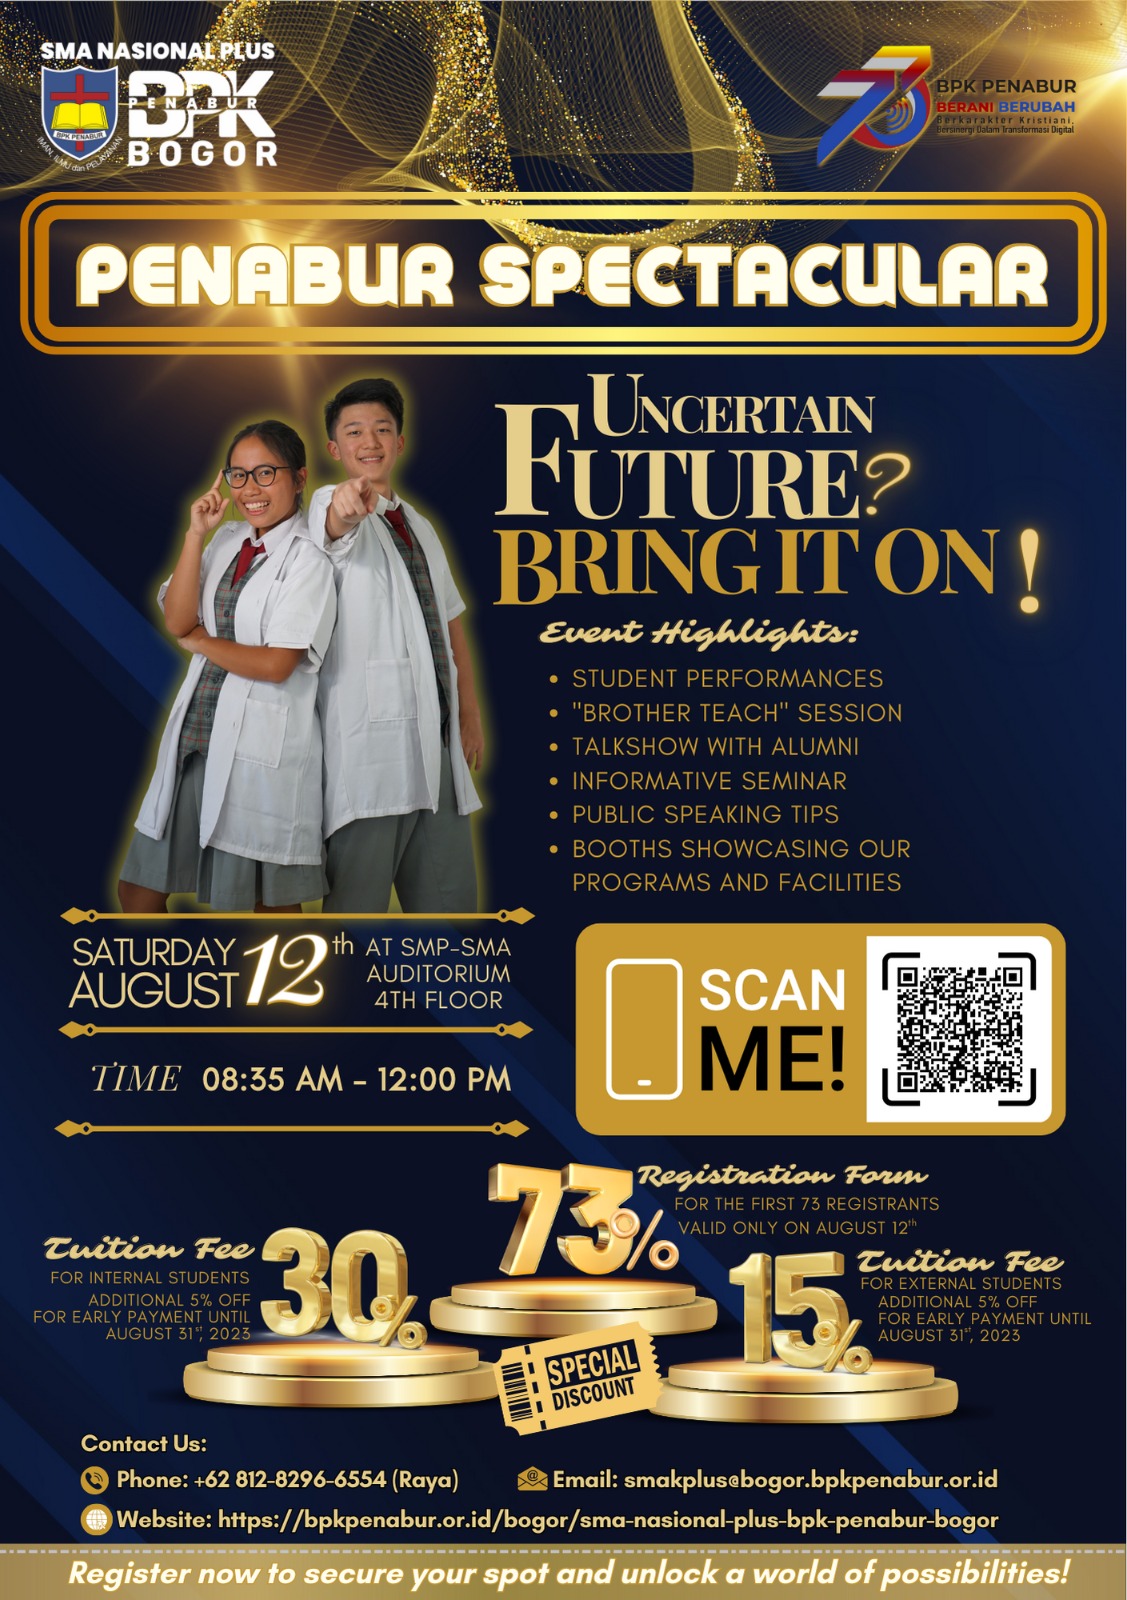 Open House of SMA Nasional Plus BPK PENABUR Bogor "PENABUR Spectacular"